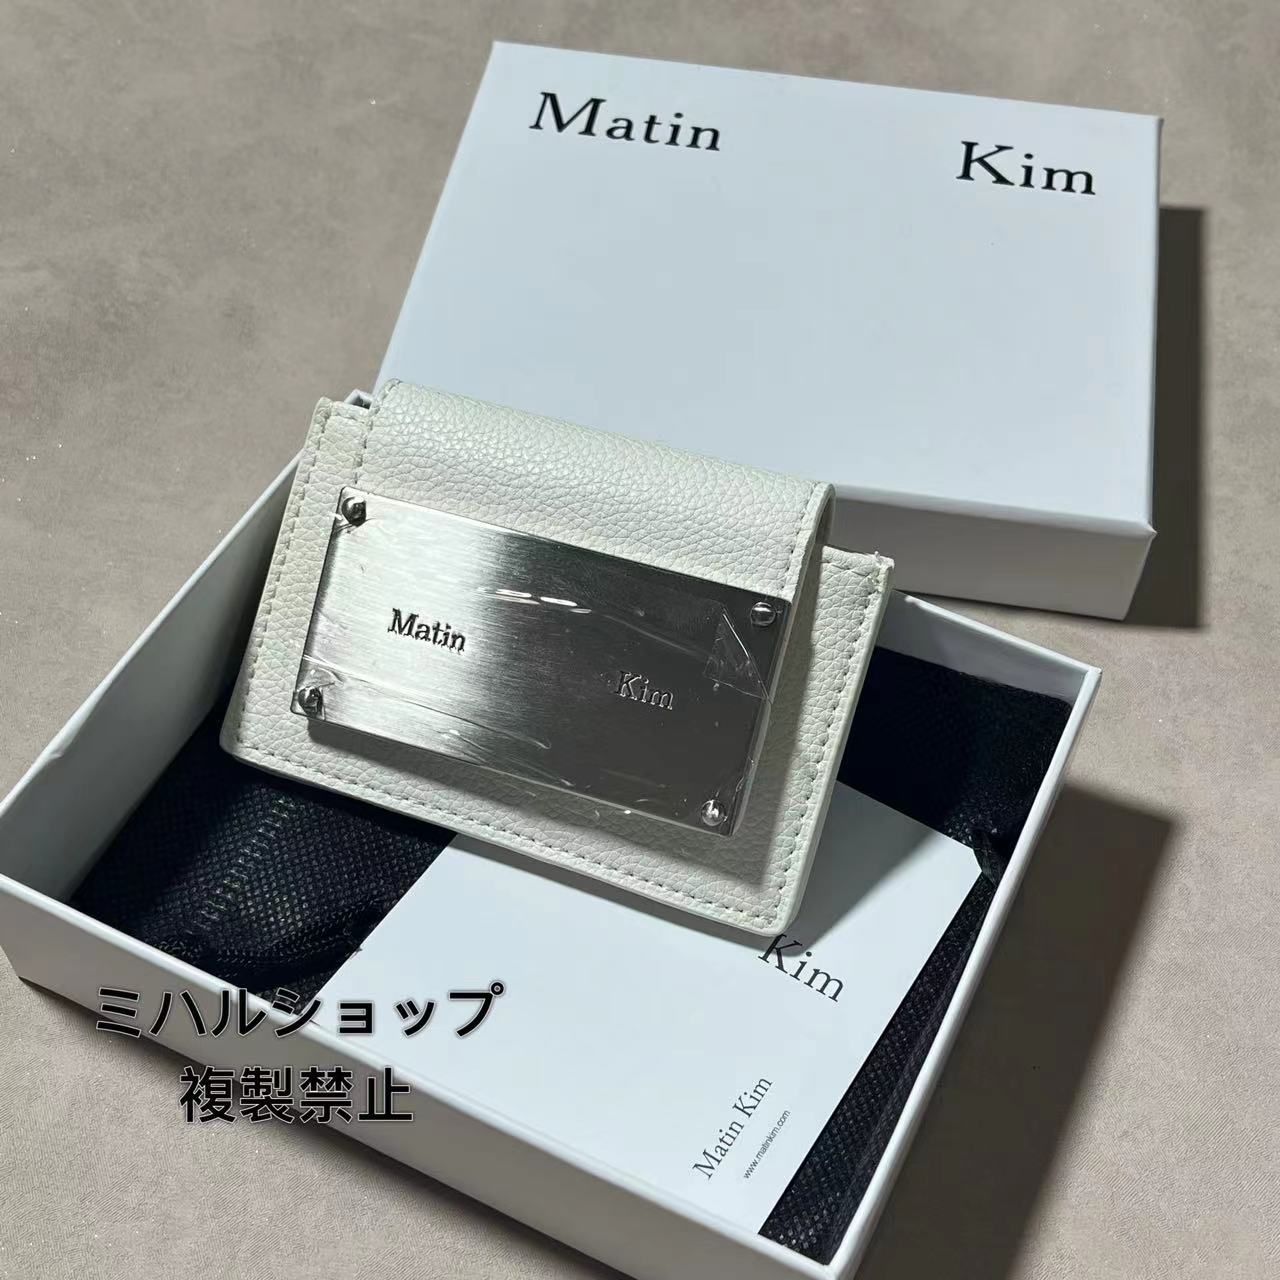 Matin Kim カードケース ホワイト - 財布・ケース・小物入れ